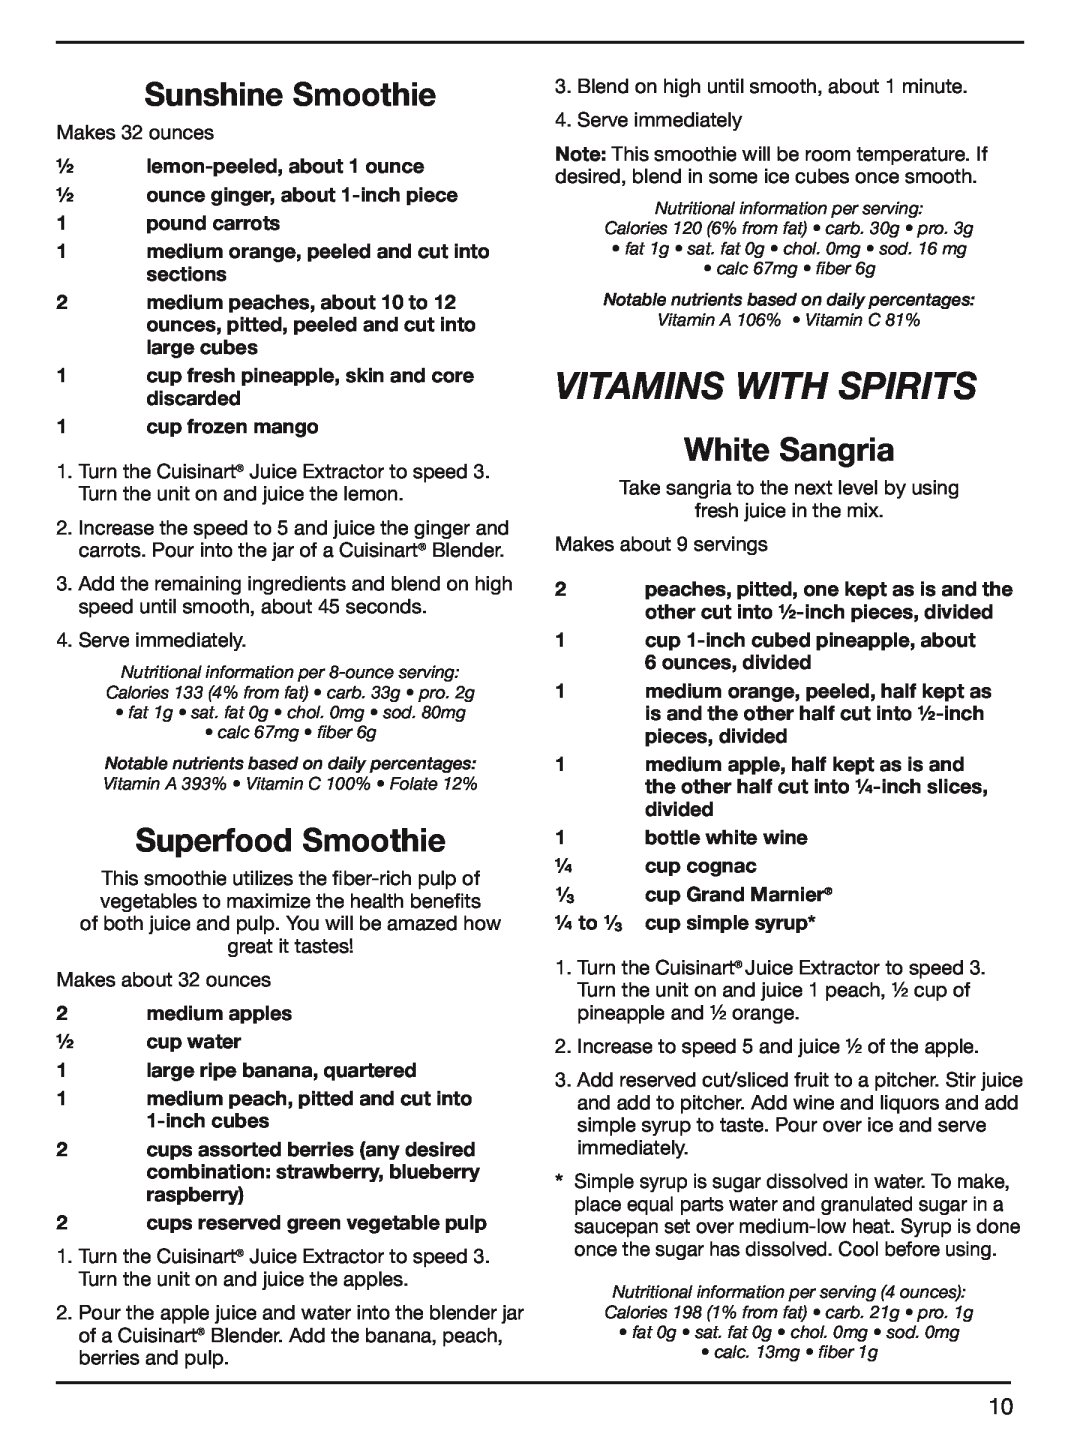 Cuisinart CJE-1000 manual vitamins with spirits, Sunshine Smoothie, Superfood Smoothie, White Sangria 